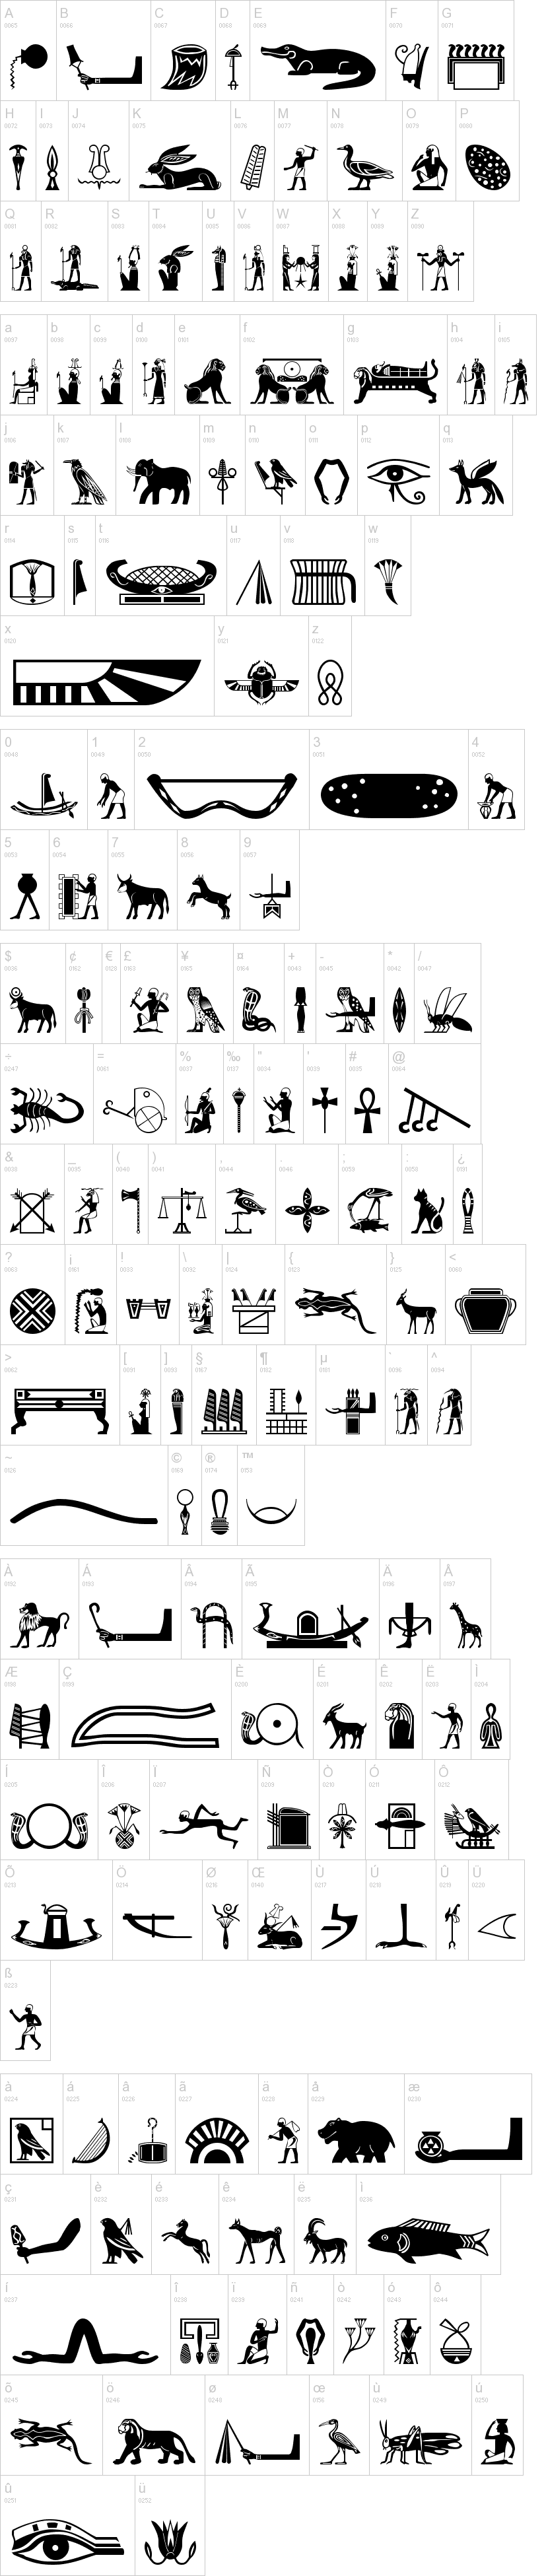 Old Egypt Glyphs字符映射图